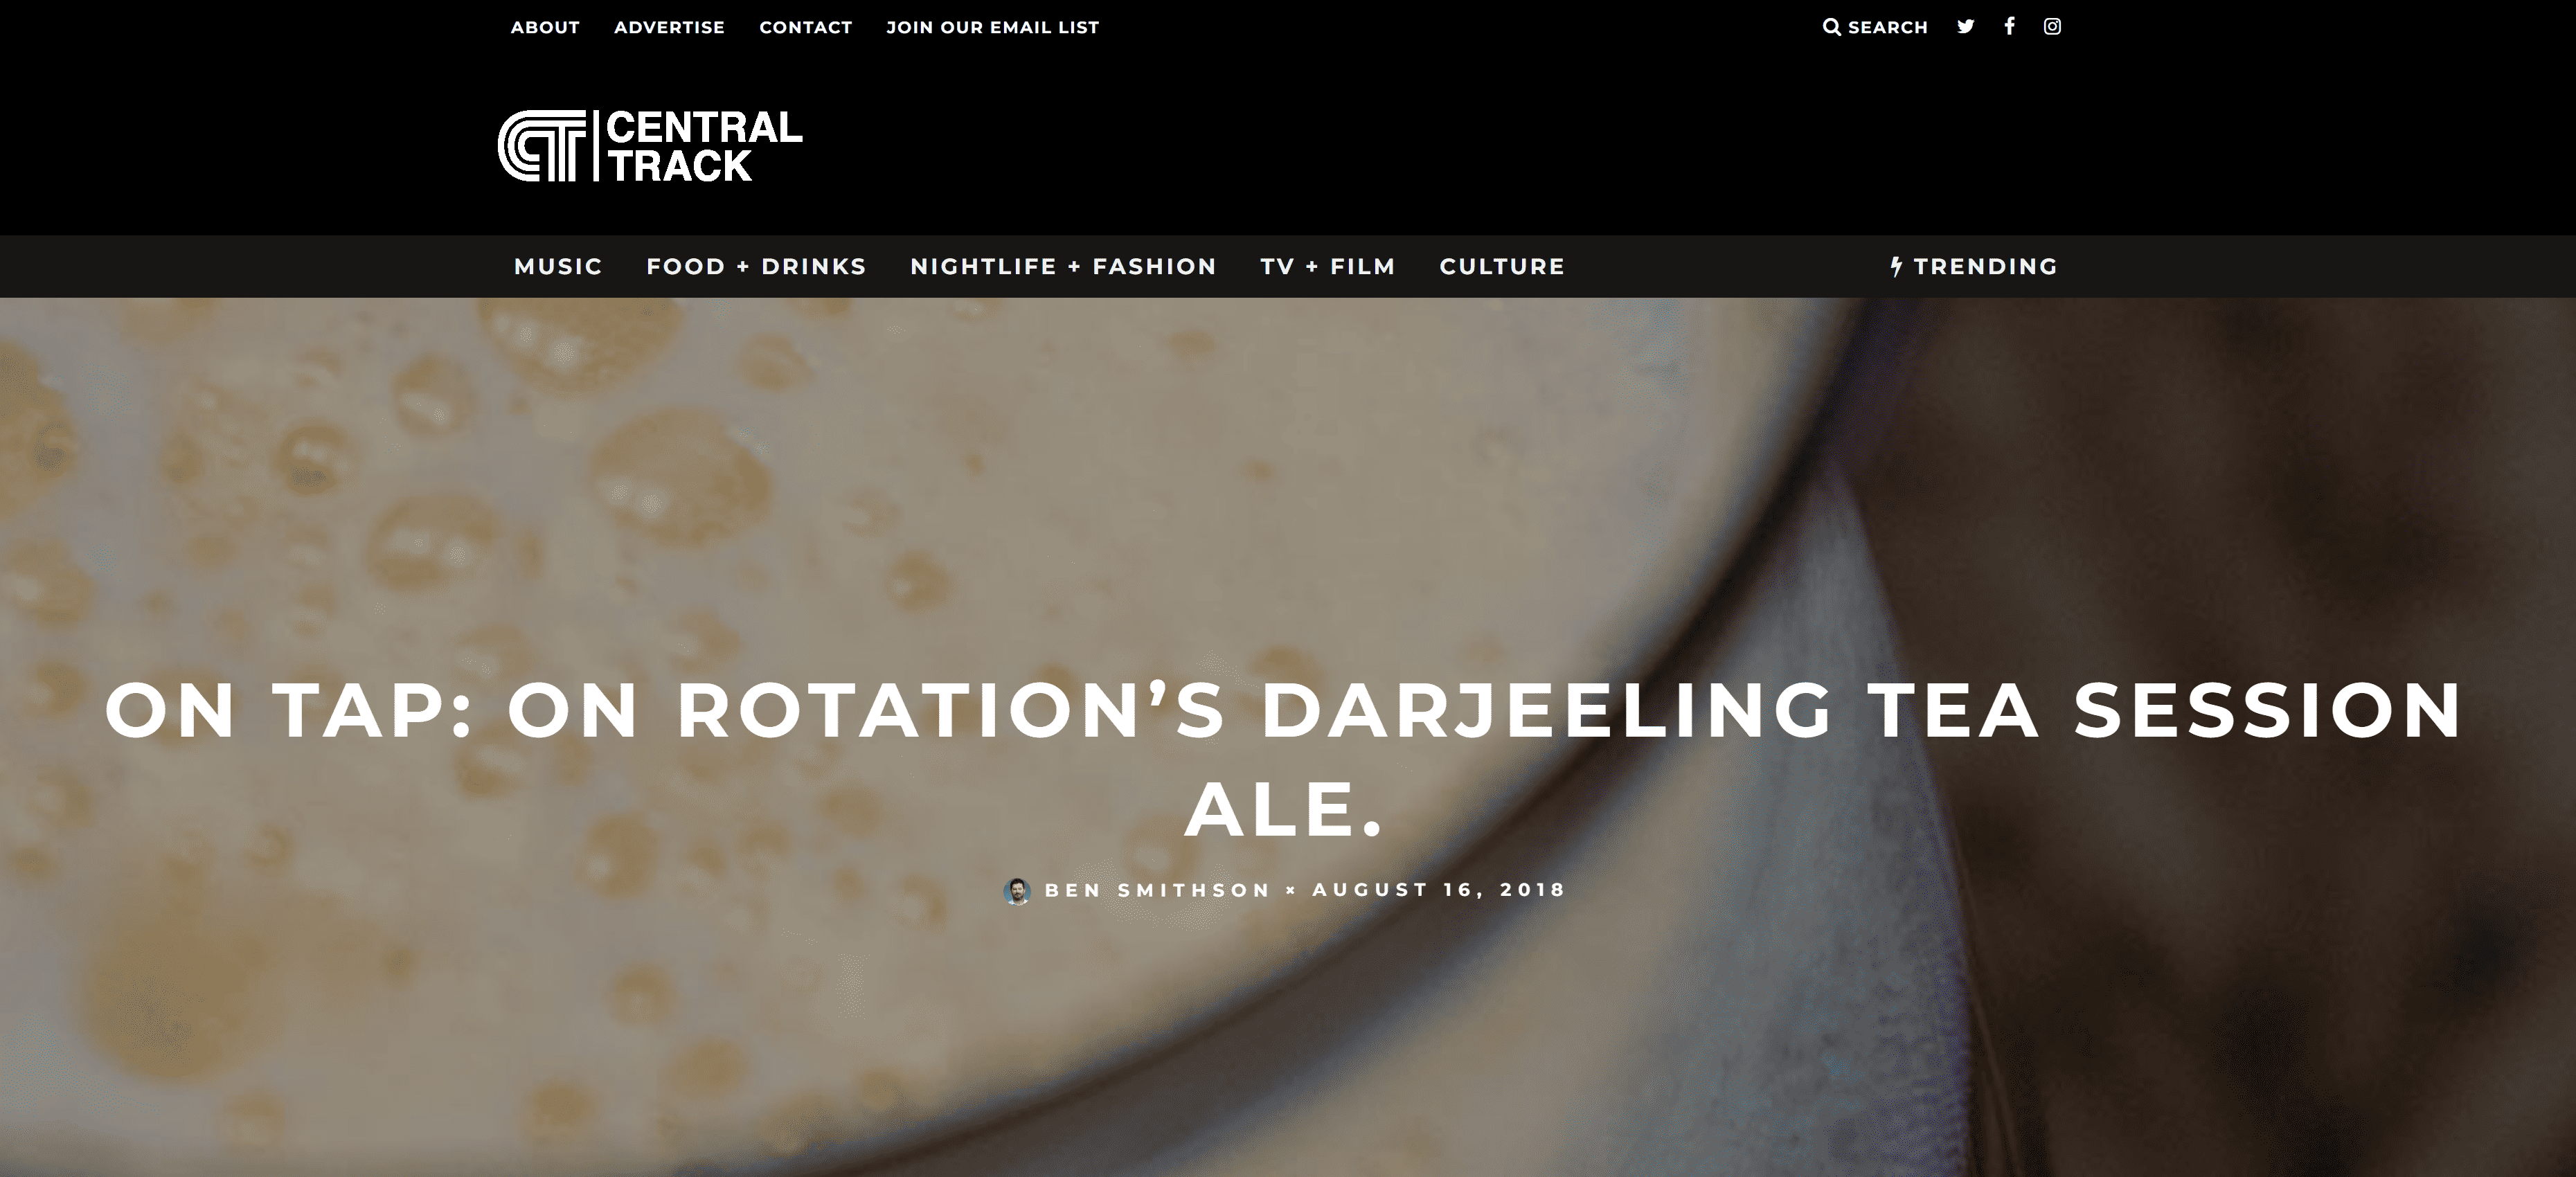 Central Track reviews Darjeeling Tea Session Ale